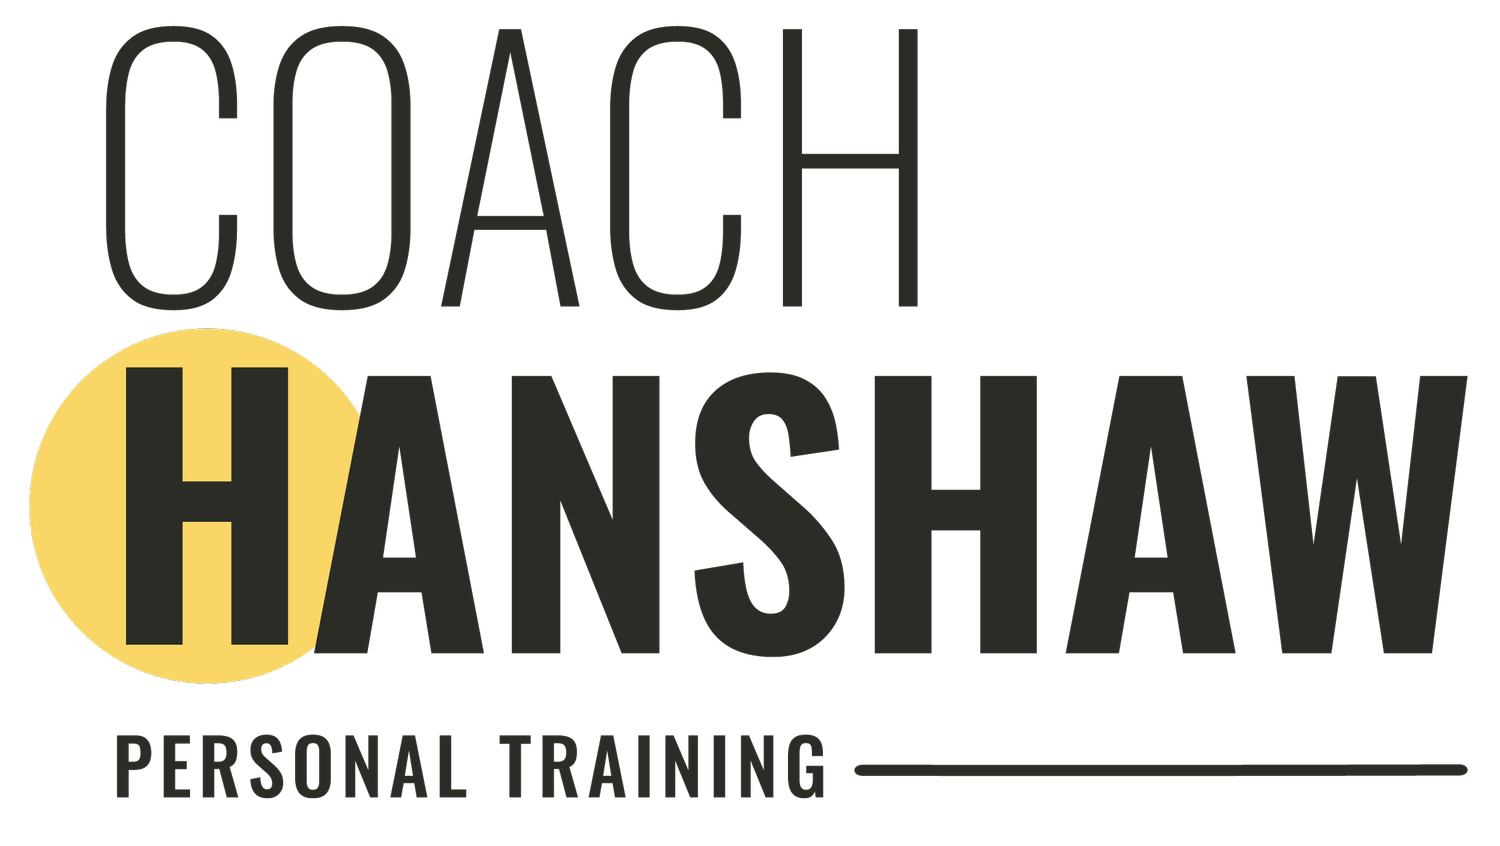 Coach Hanshaw Personal Training